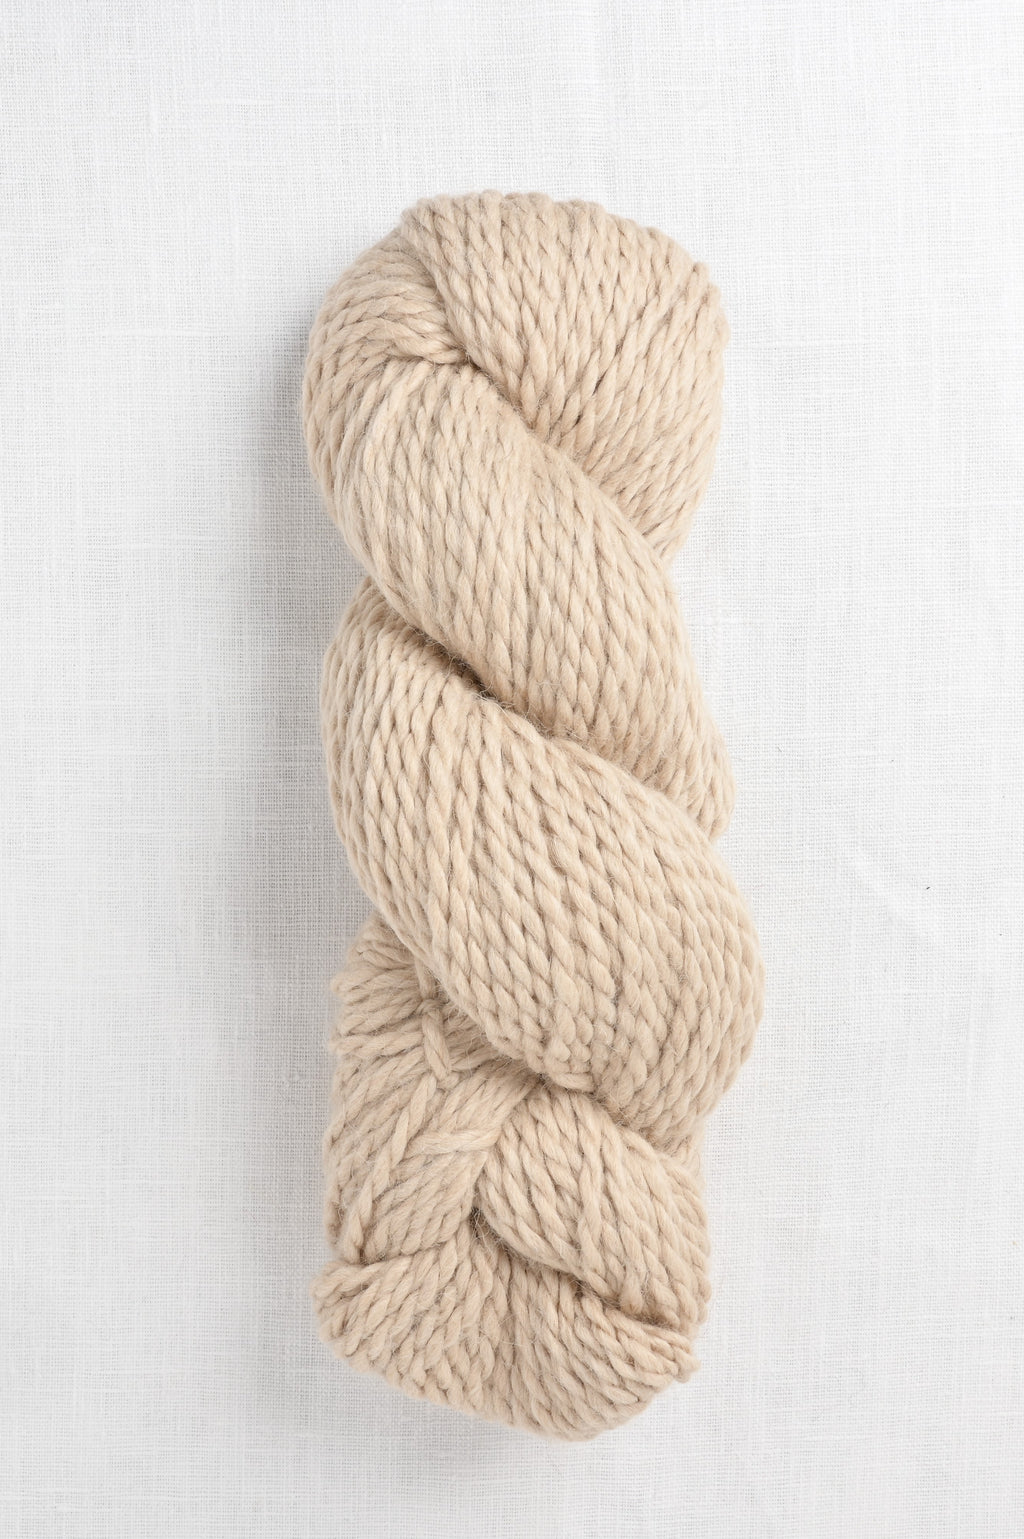 CAVAYOMA 100% Baby Alpaca Yarn Chunky in 30+ Colors (Itch-Free) #5 Bulky  Baby Alpaca Yarn for Knitting & Crocheting Set of 6 Skeins (300g, 10,5oz)